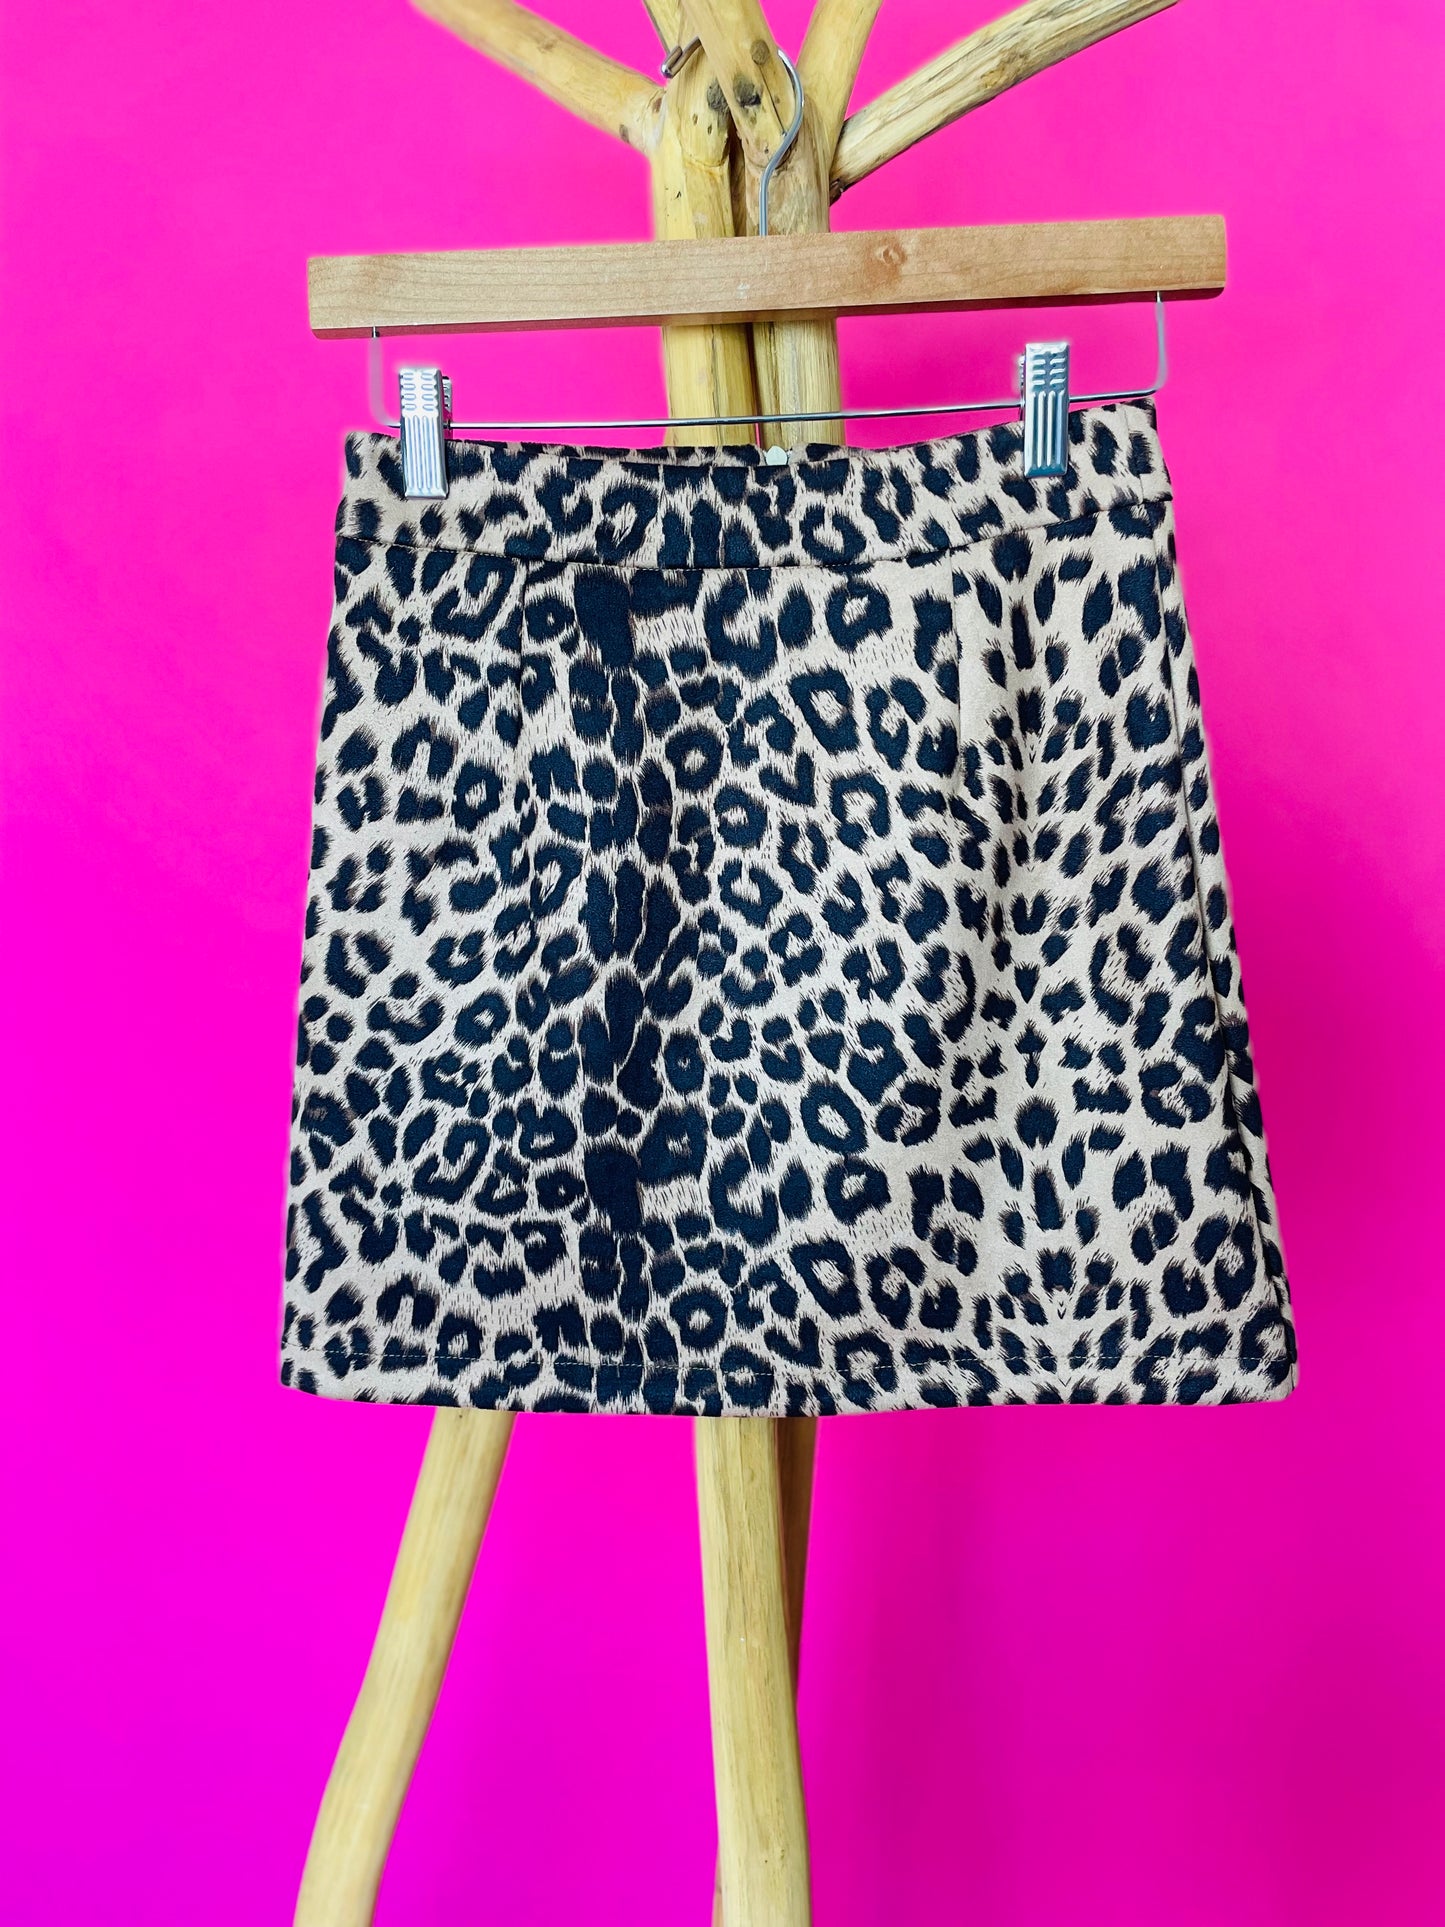 Leopard suede skirt